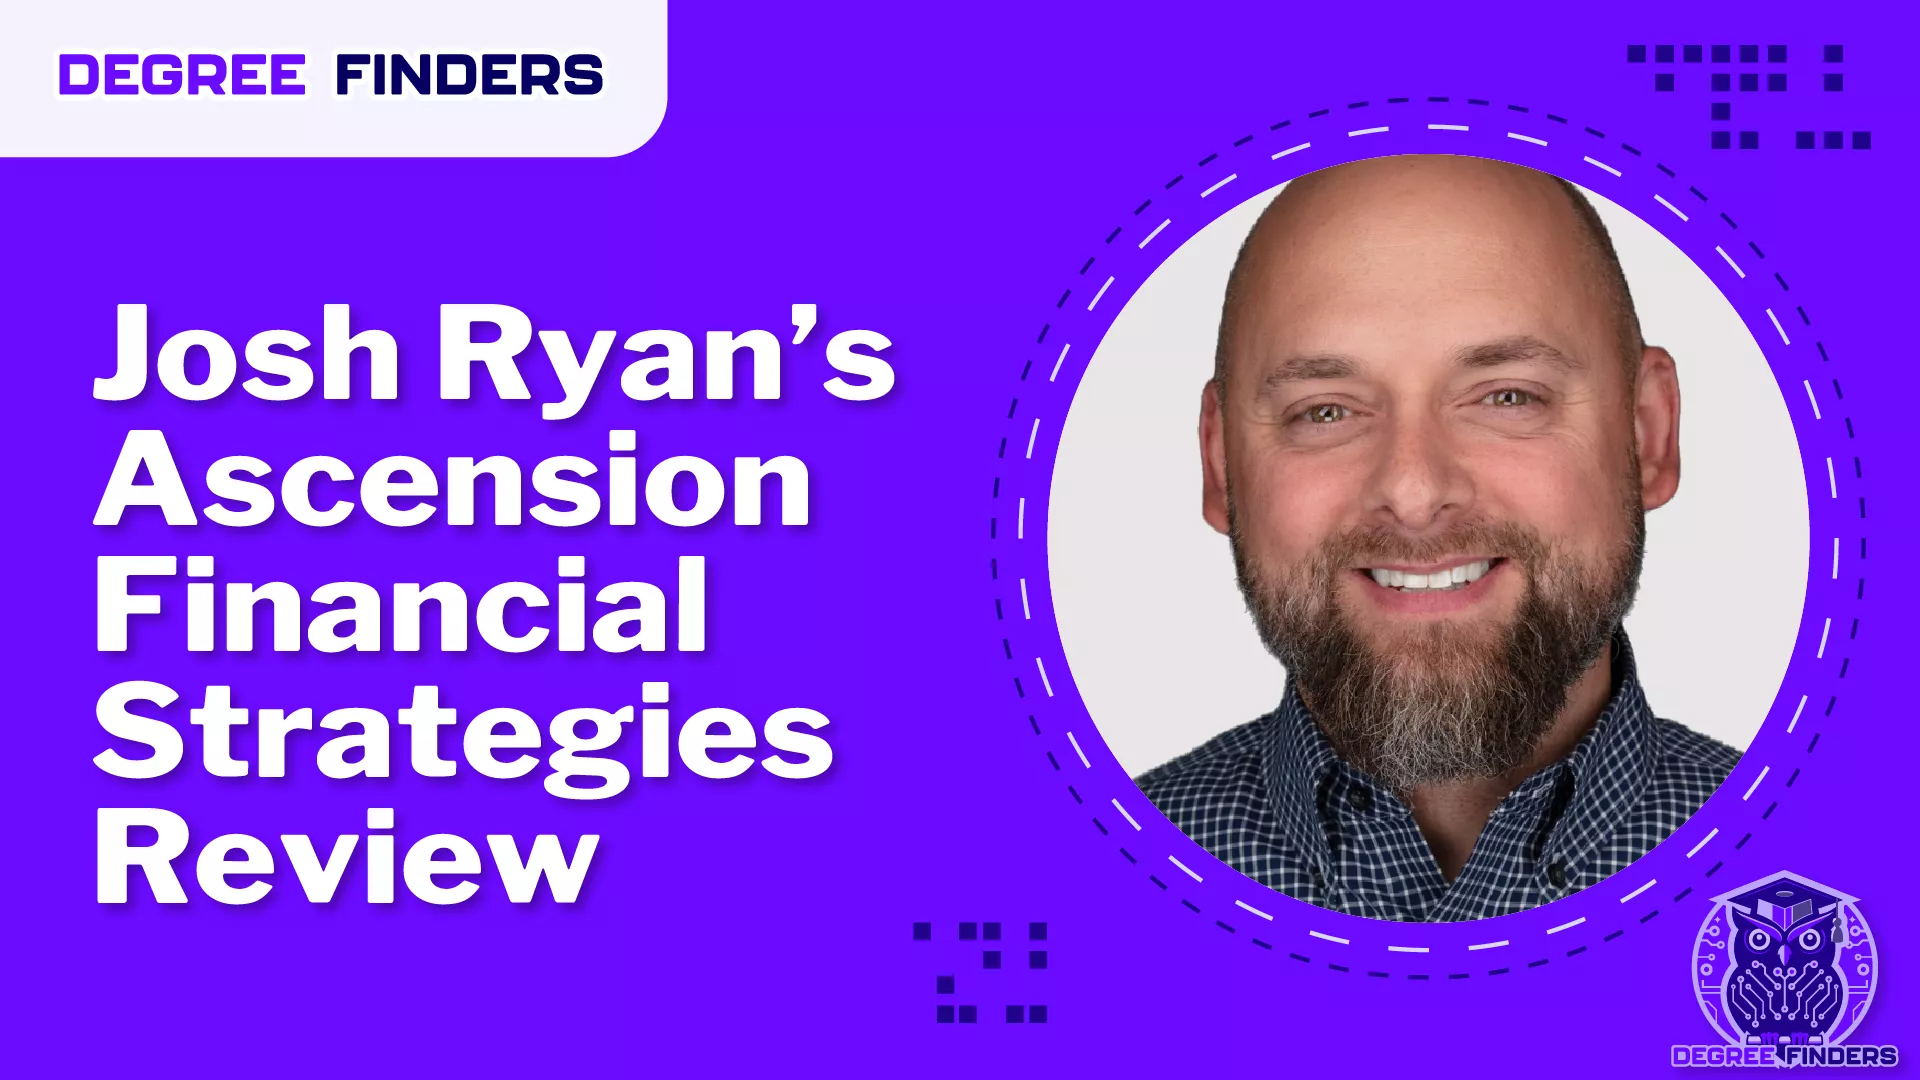 Josh Ryan’s Ascension Financial Strategies Review